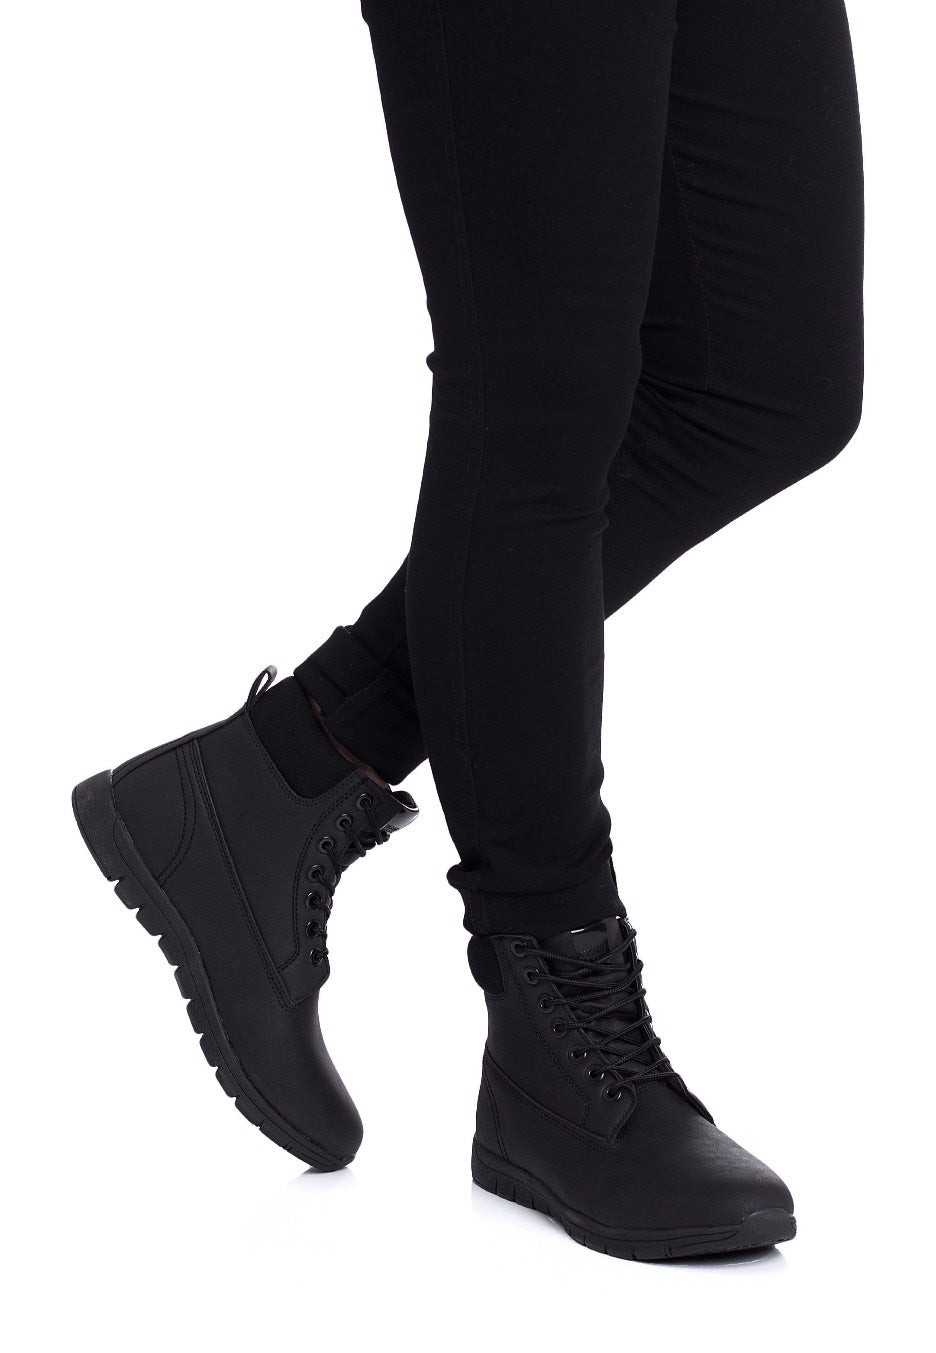 Urban Classics - Runner Boots Black/Black/Black - Shoes